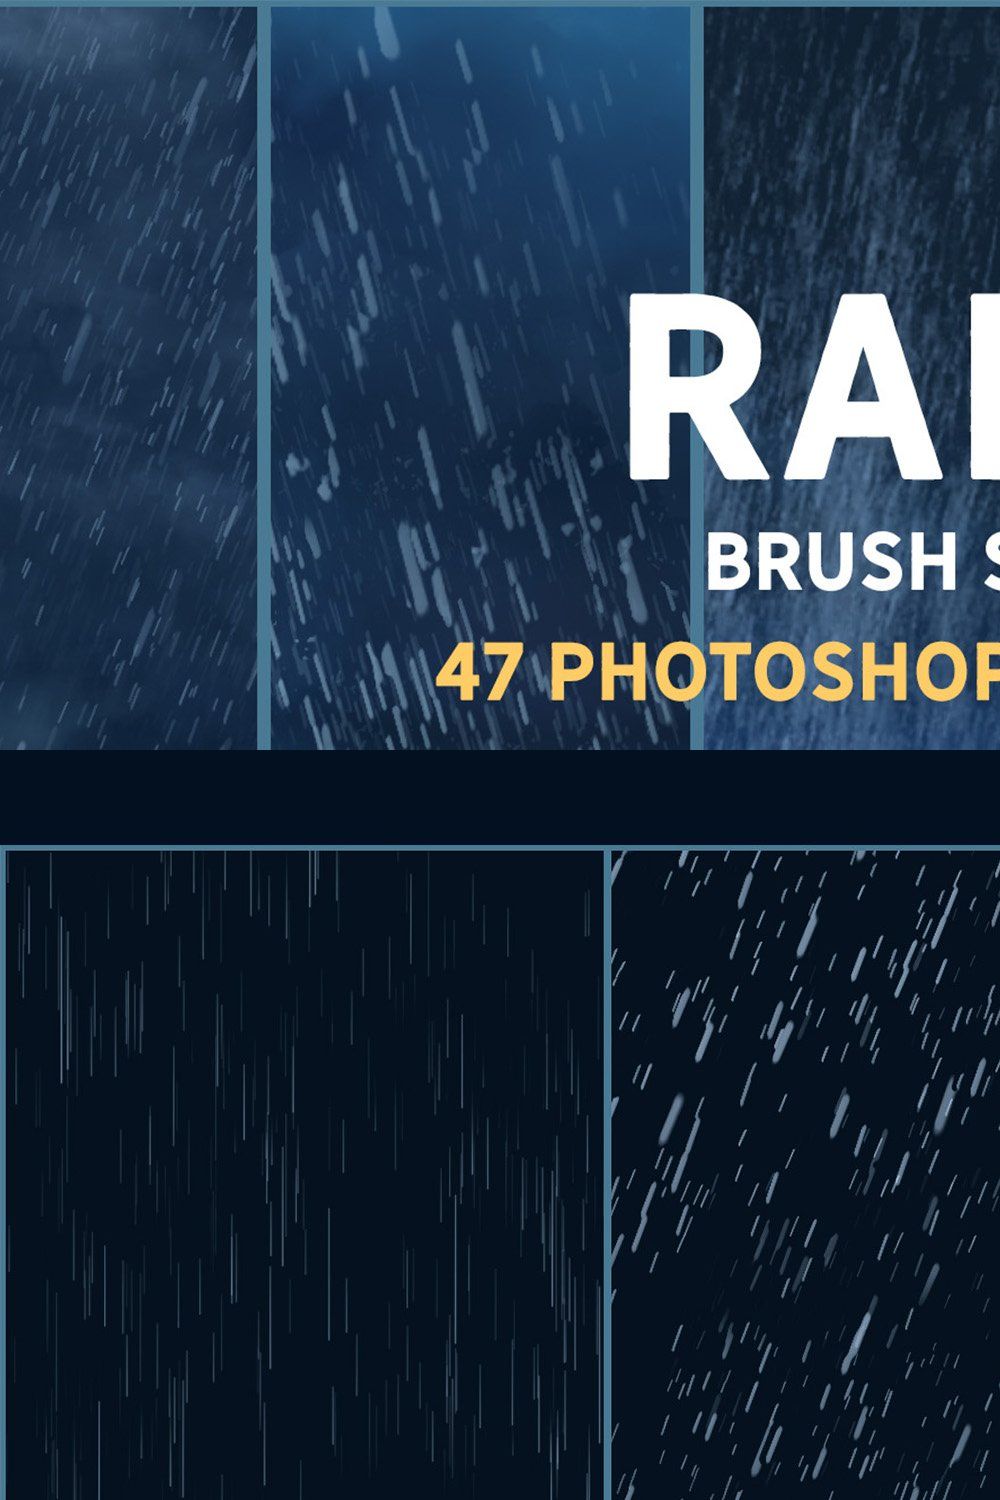 Rain brush set pinterest preview image.